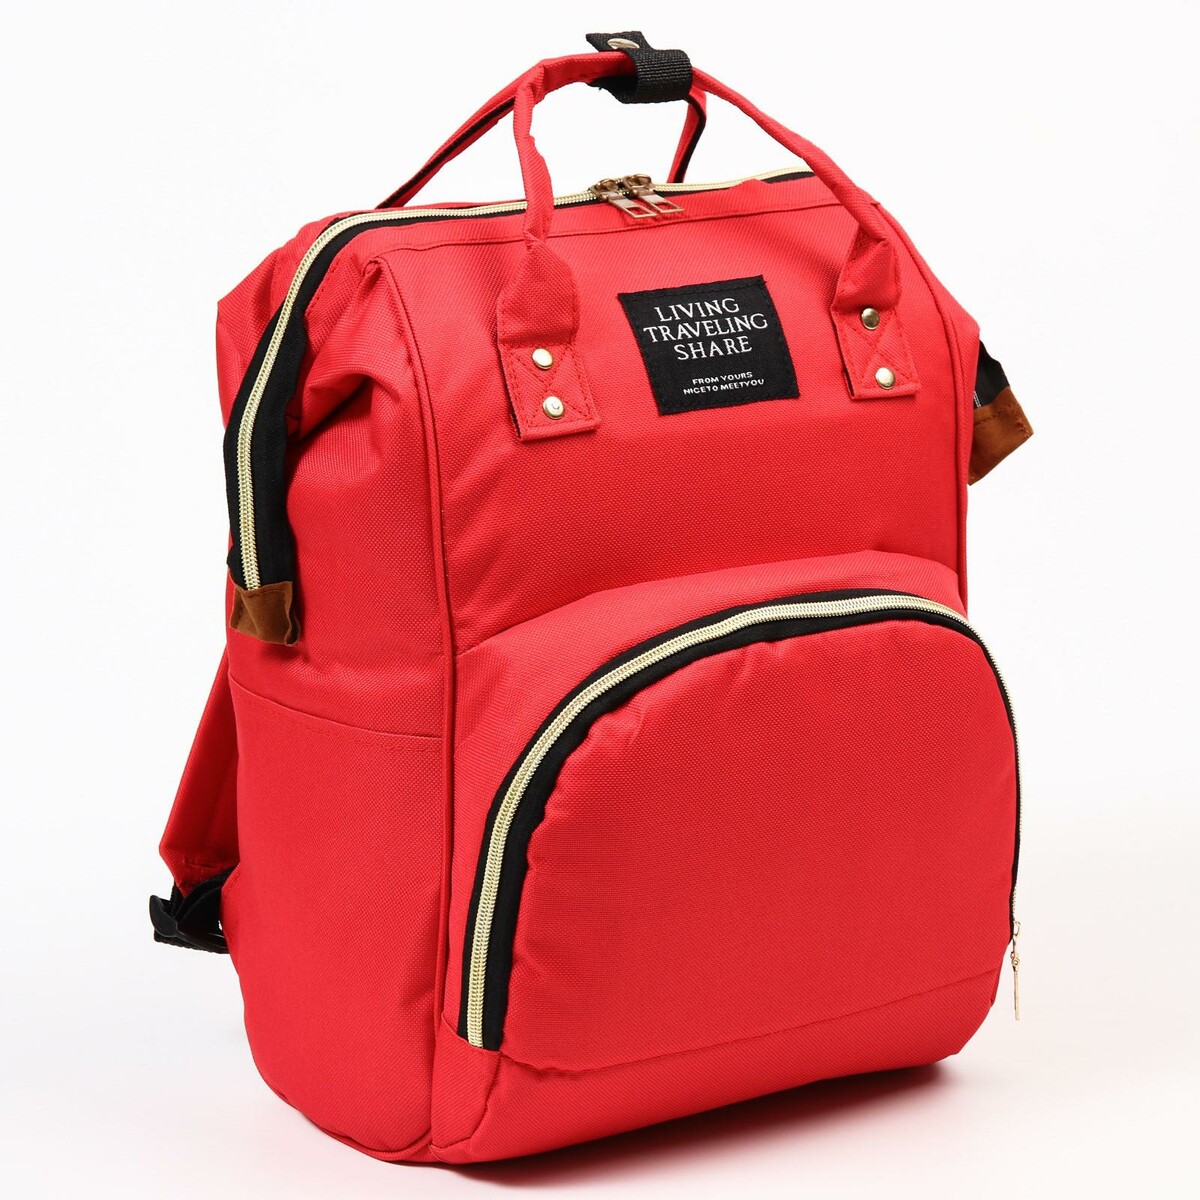 Рюкзак женский с термокарманом, термосумка - портфель, цвет красный рюкзак женский с термокарманом термосумка портфель розовый